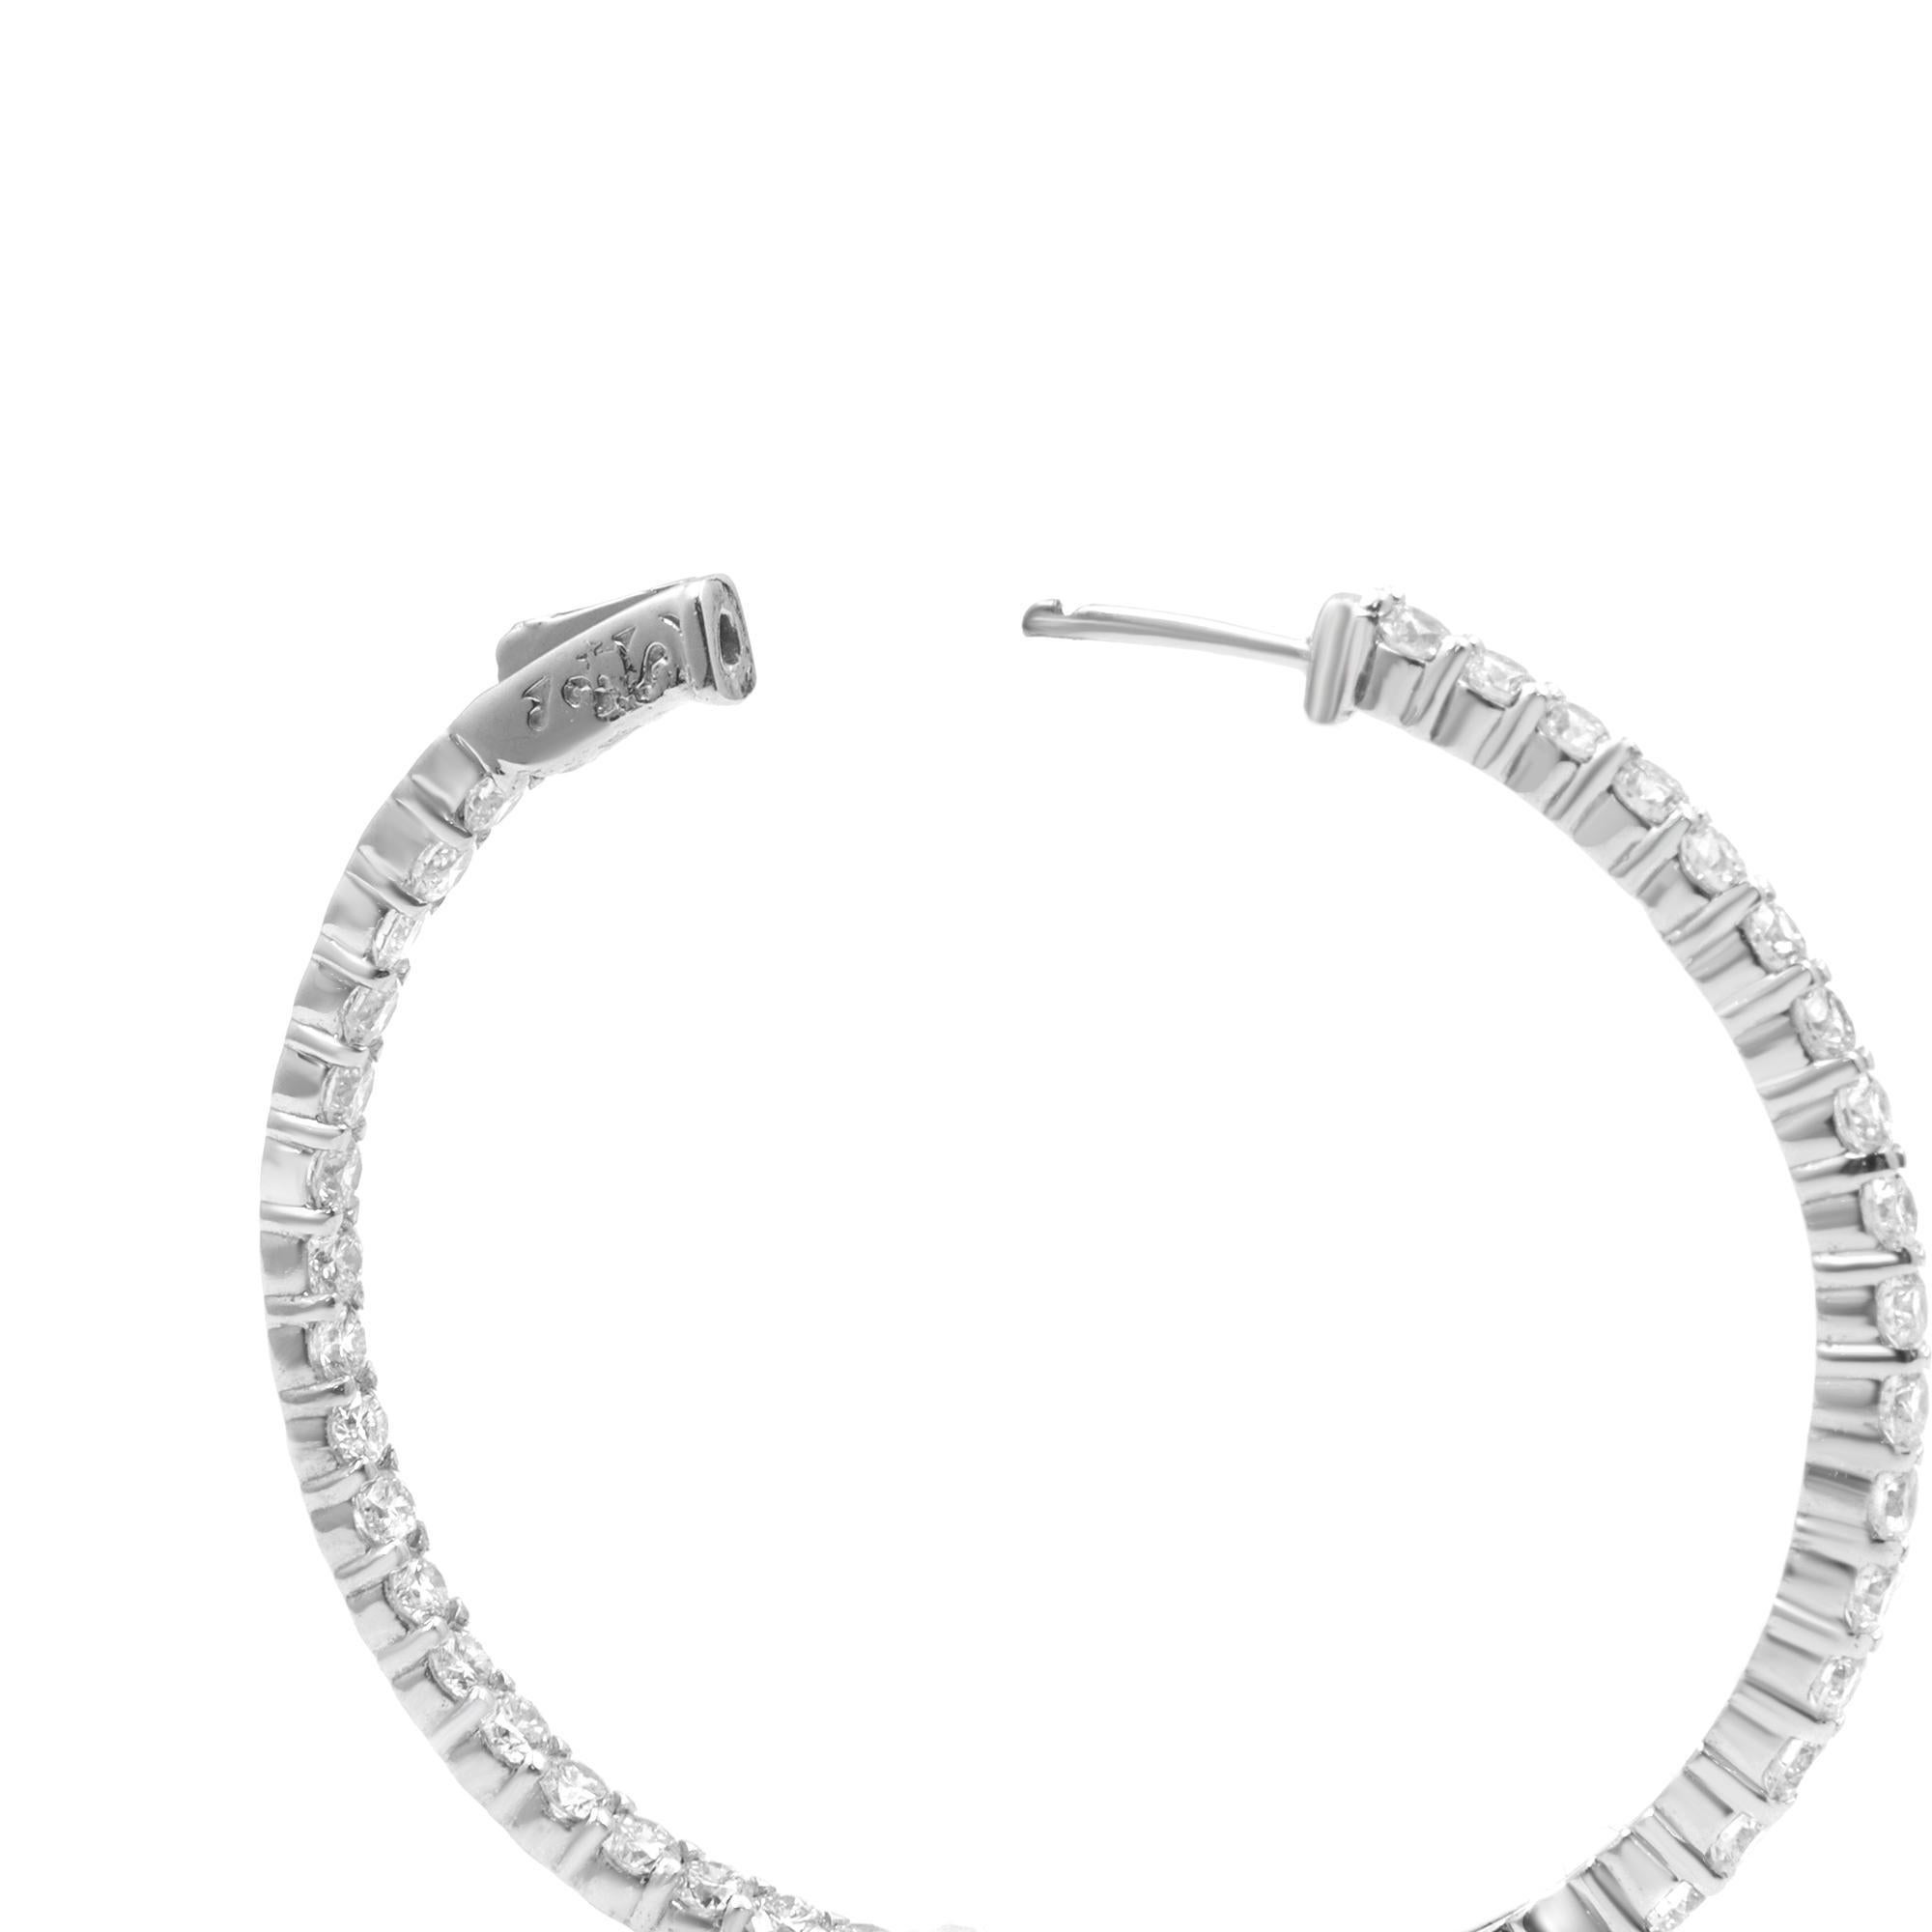 Rachel Koen Inside Out Diamond Hoop Earrings 14K White Gold 5.61cttw In New Condition For Sale In New York, NY